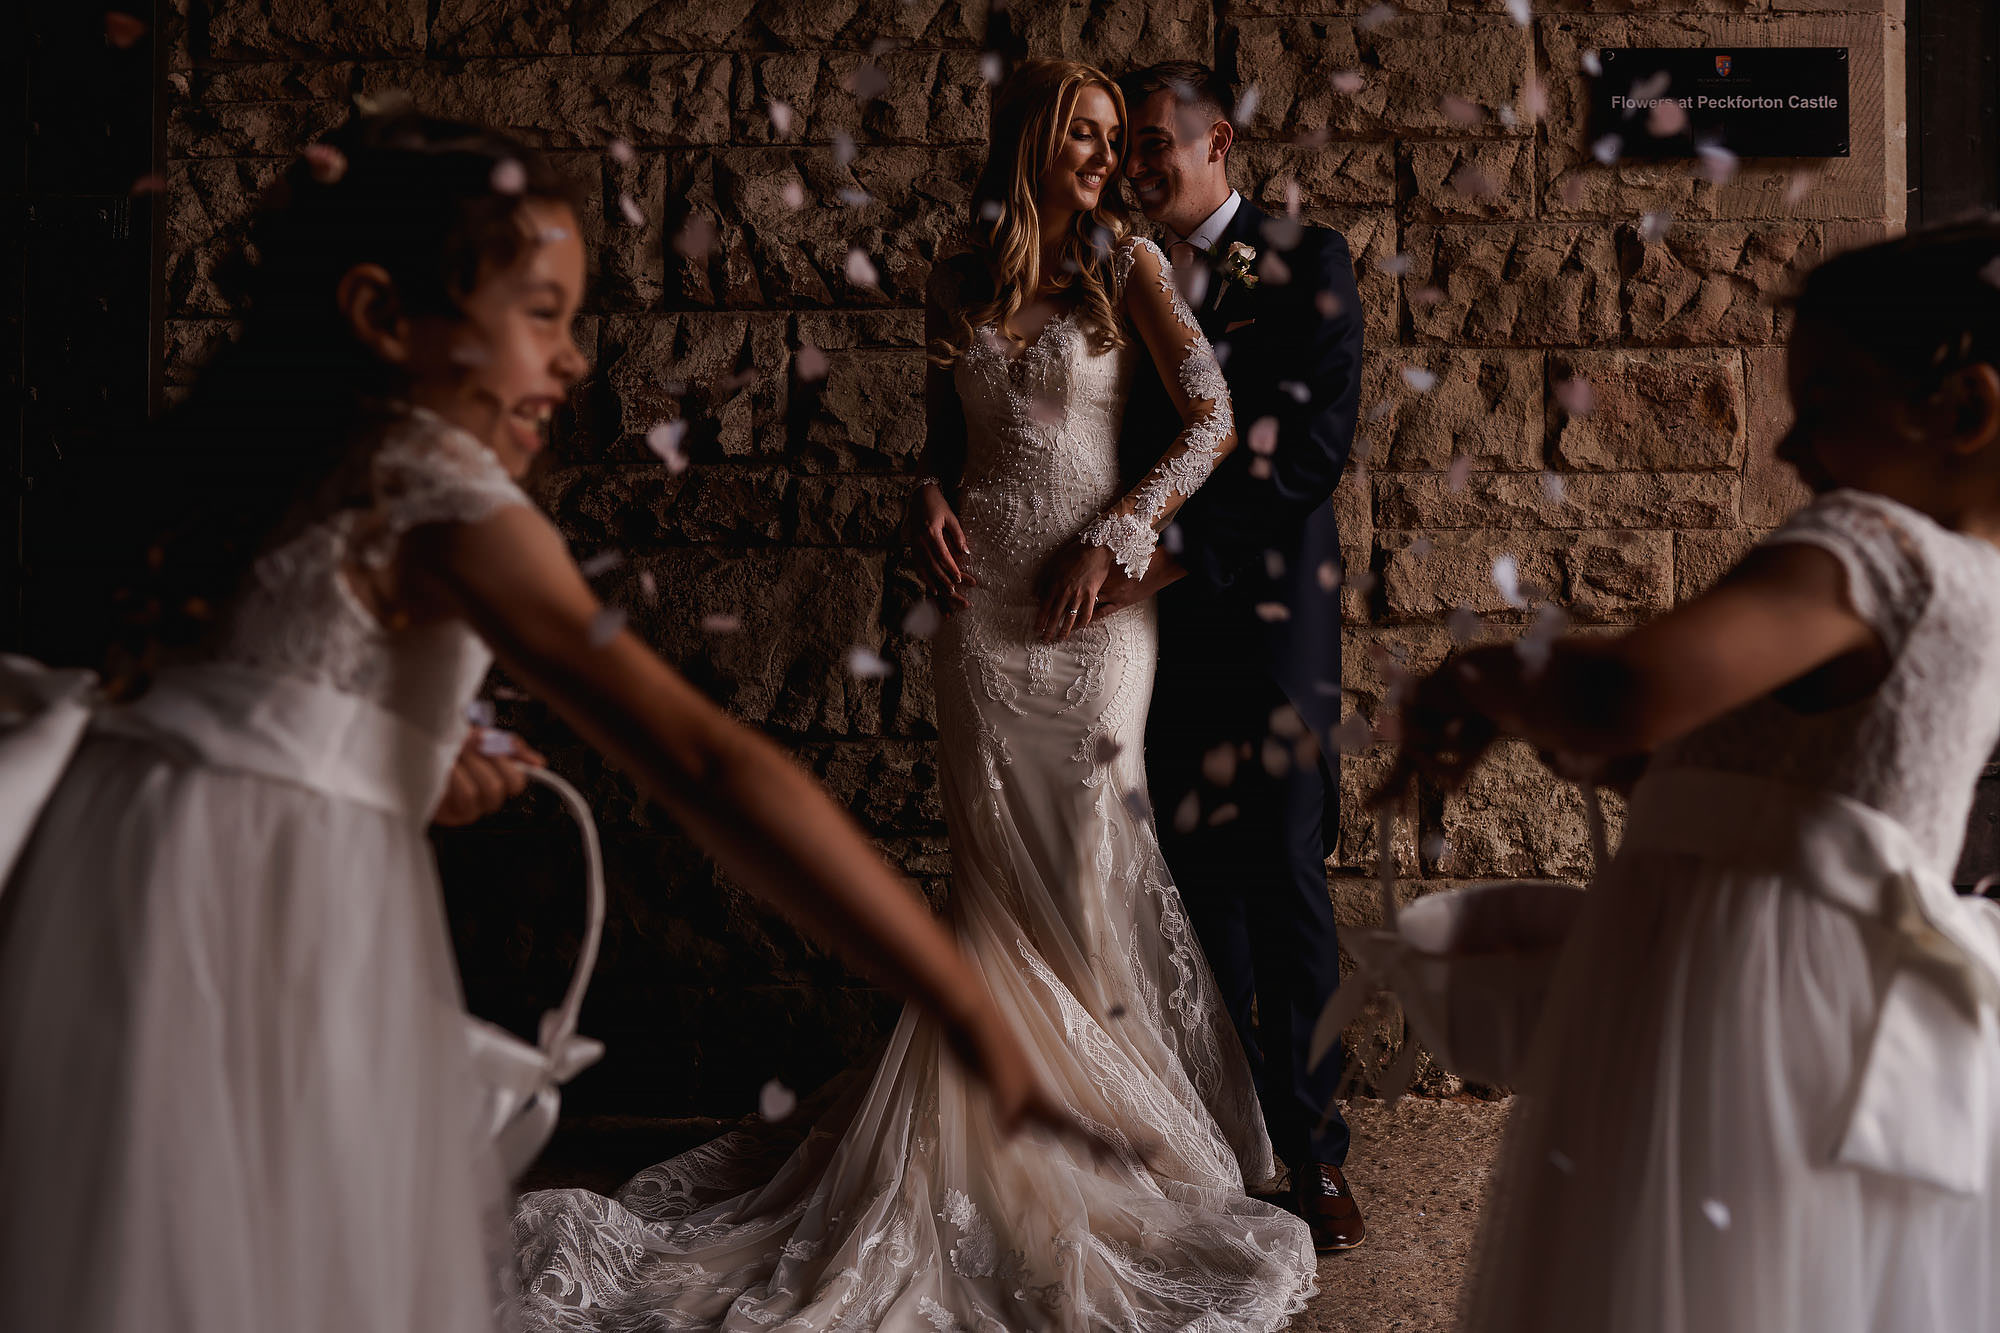 Peckforton castle luxury wedding - beautiful fine art wedding photography by arj photography cheshire